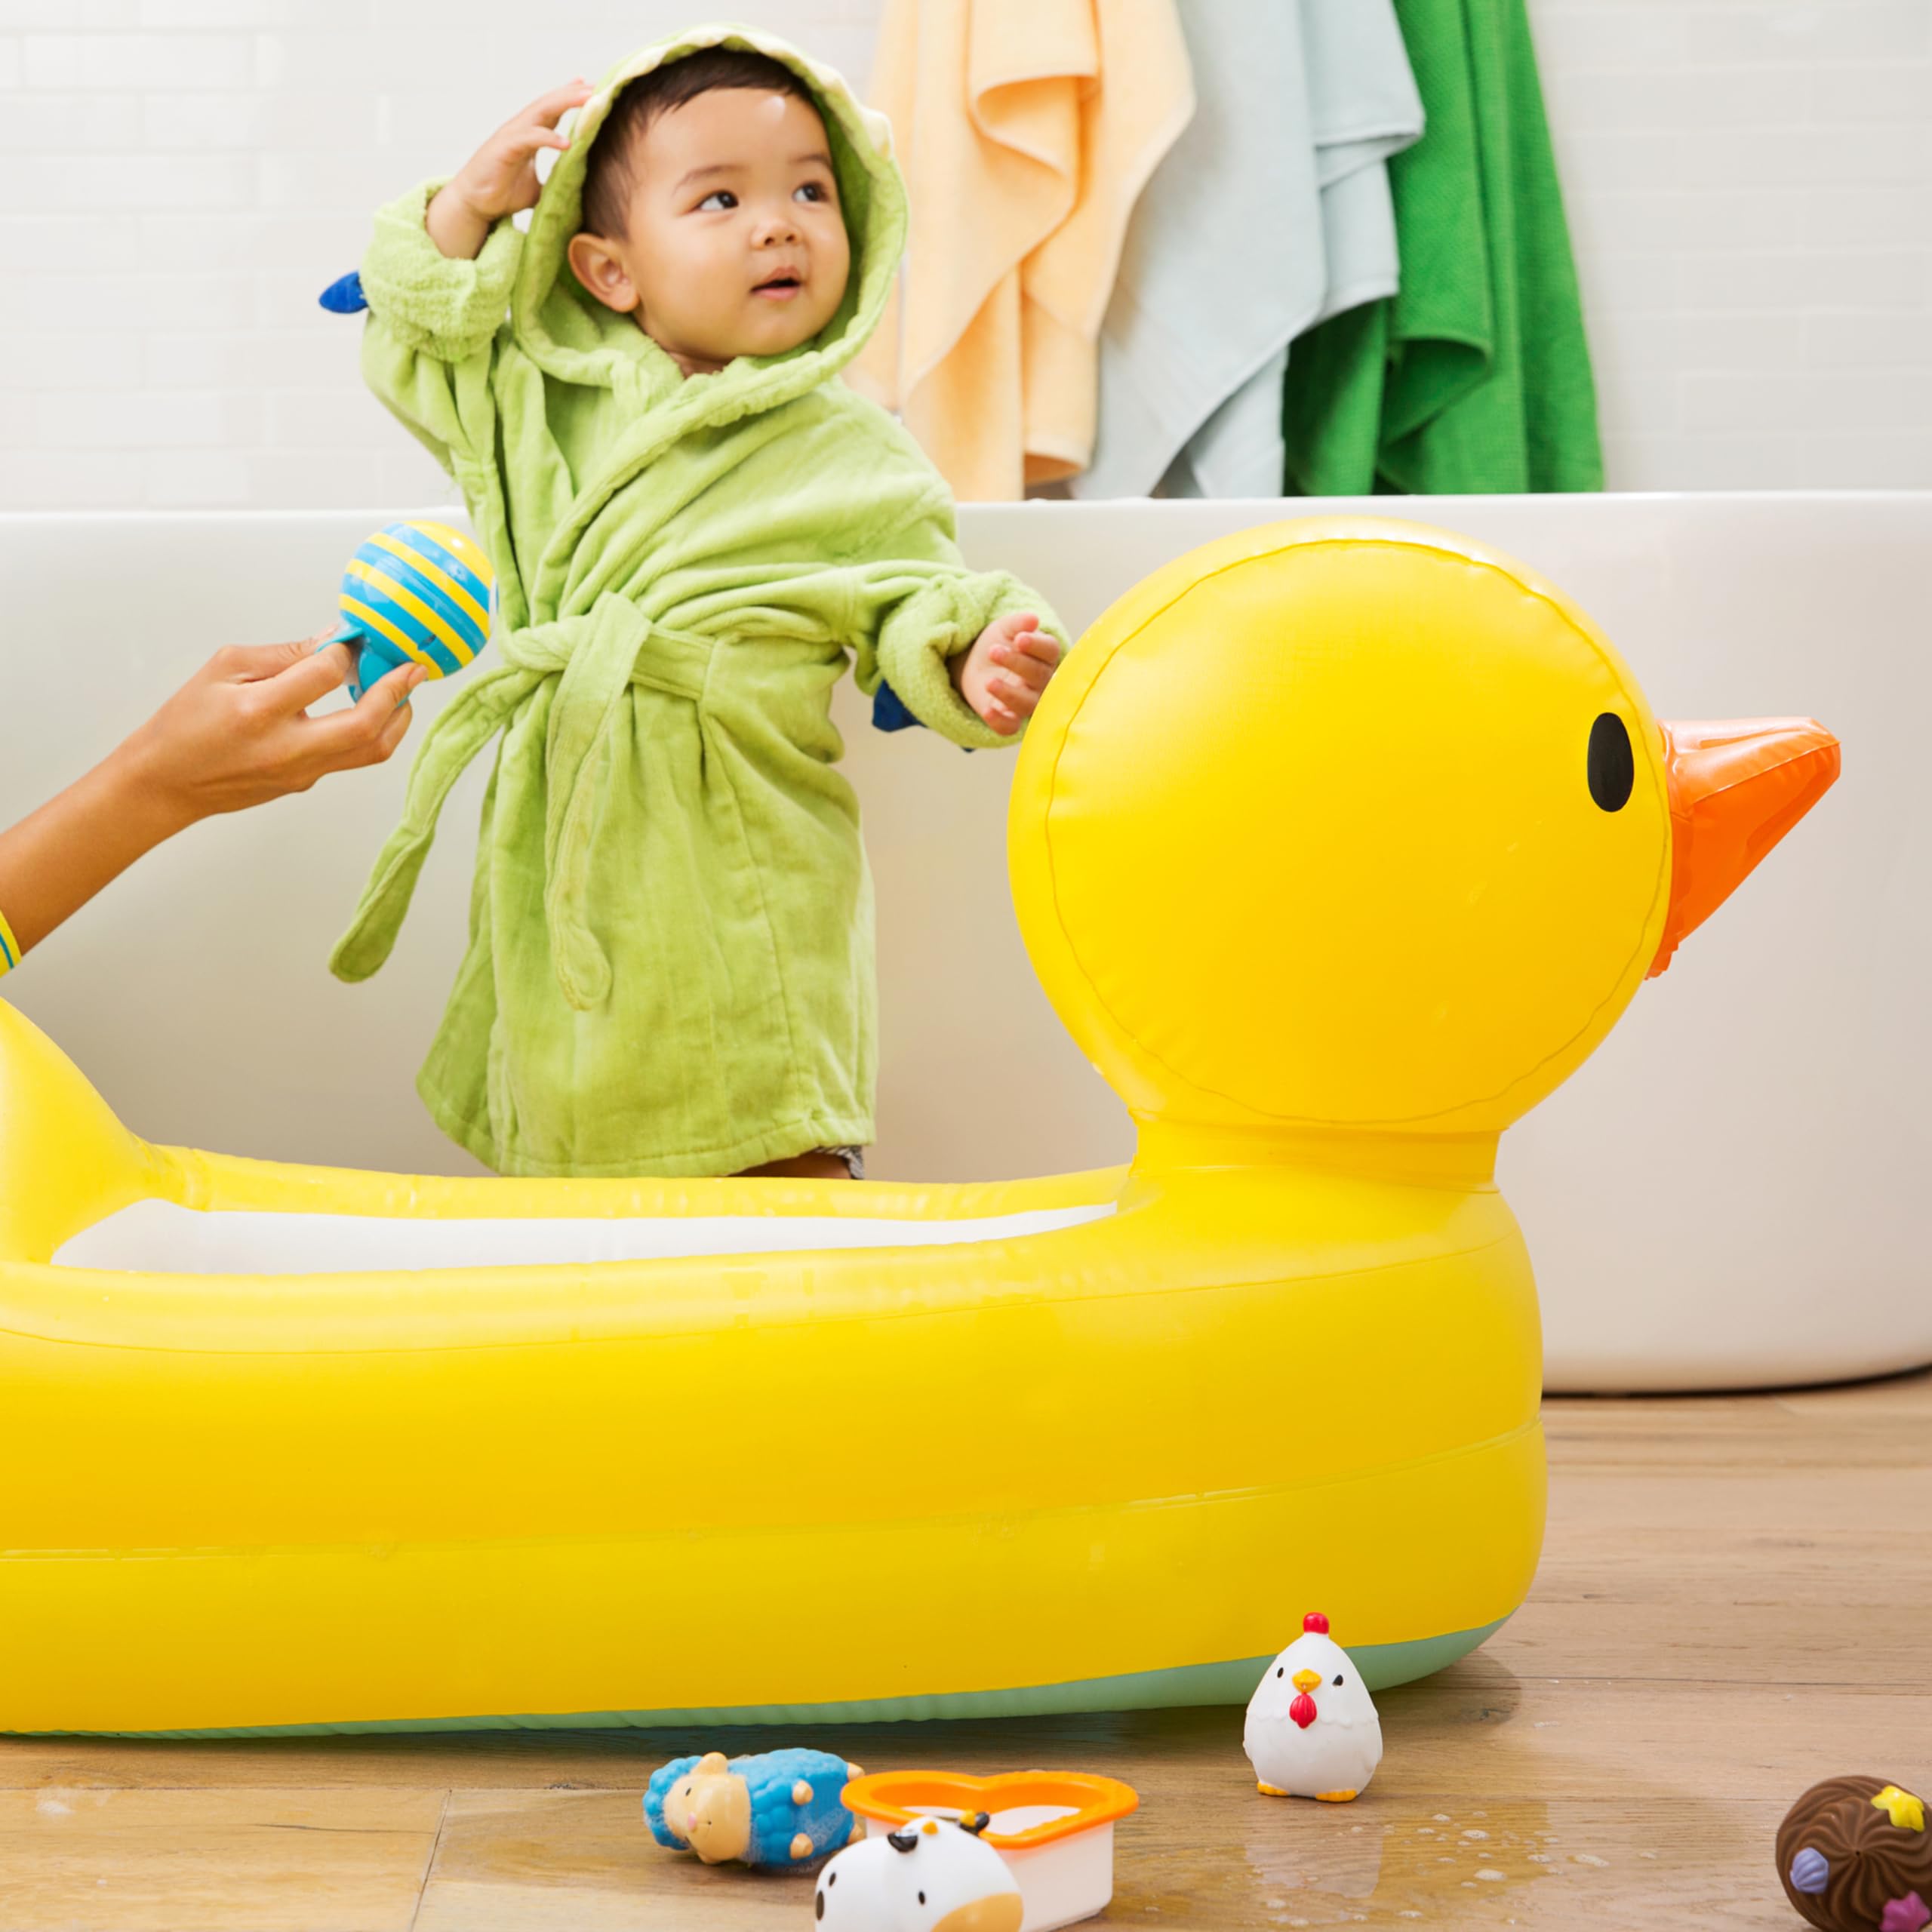 Munchkin® Duck™ Inflatable Baby Bathtub with White Hot® Heat Alert & Rinse™ Shampoo Bath Rinser, Blue